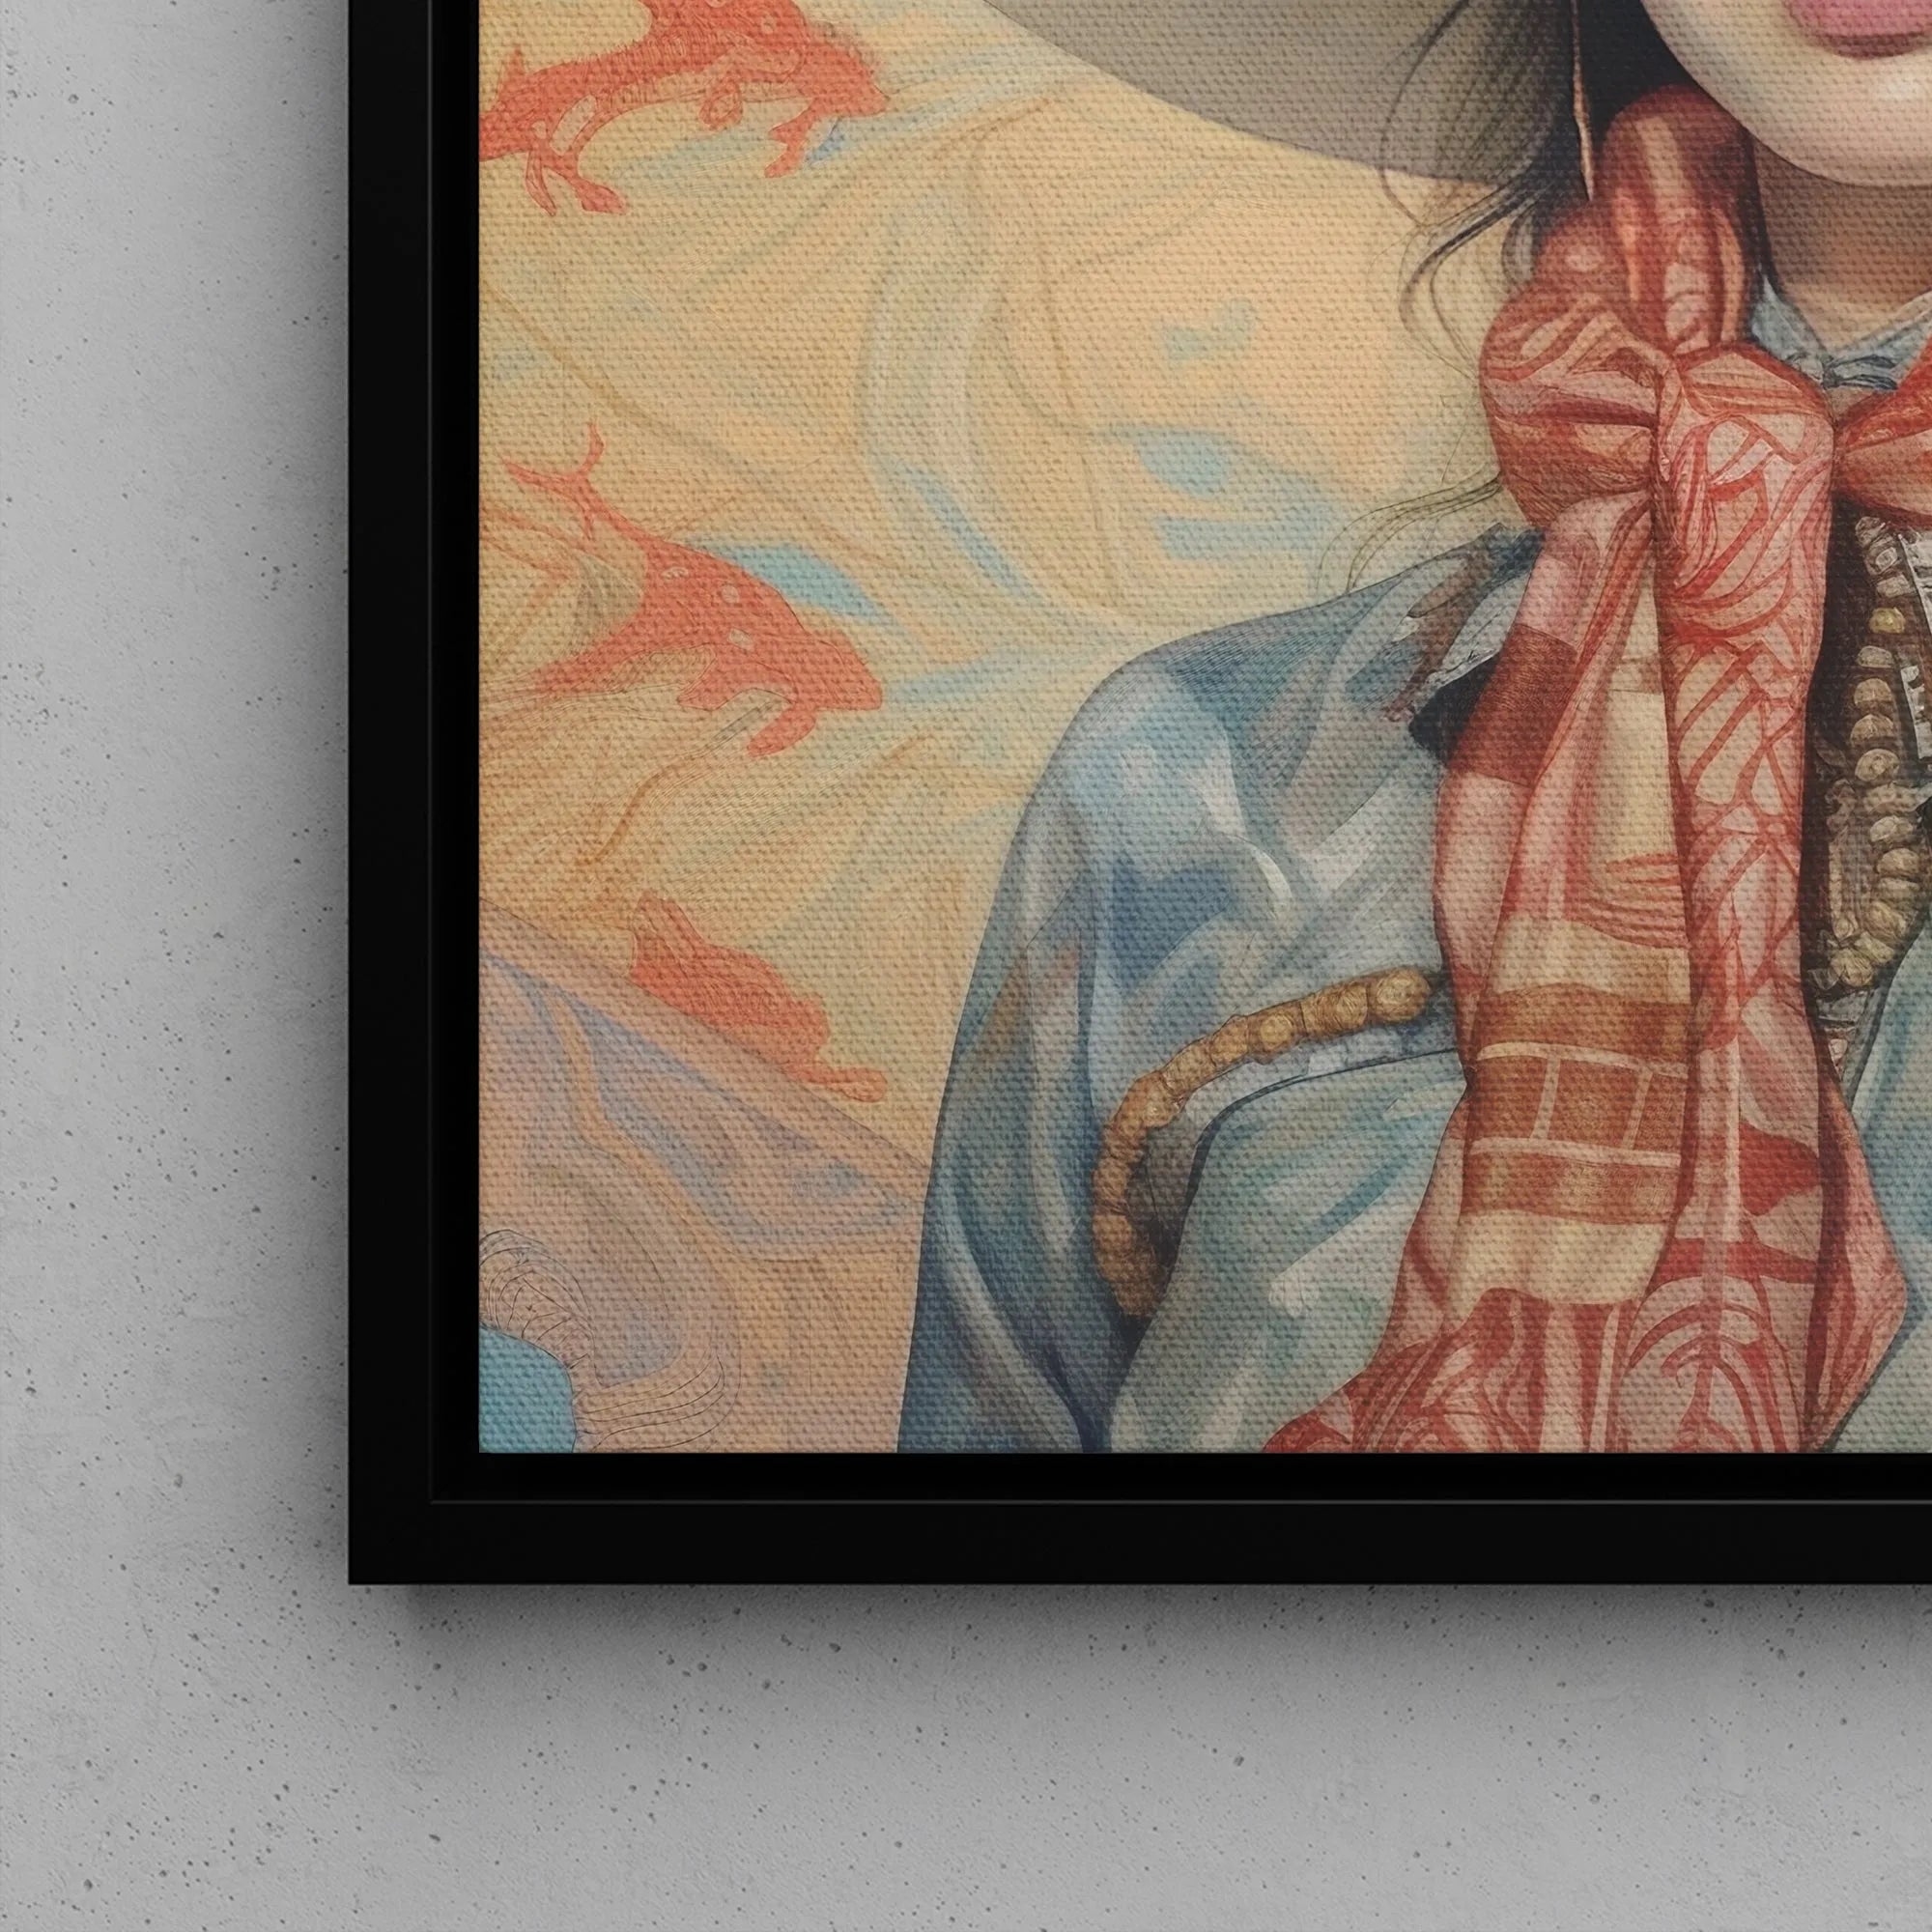 Dai Lu - Lesbian Cowgirl Framed Canvas - Chinese Sapphic Art - Posters Prints & Visual Artwork - Aesthetic Art